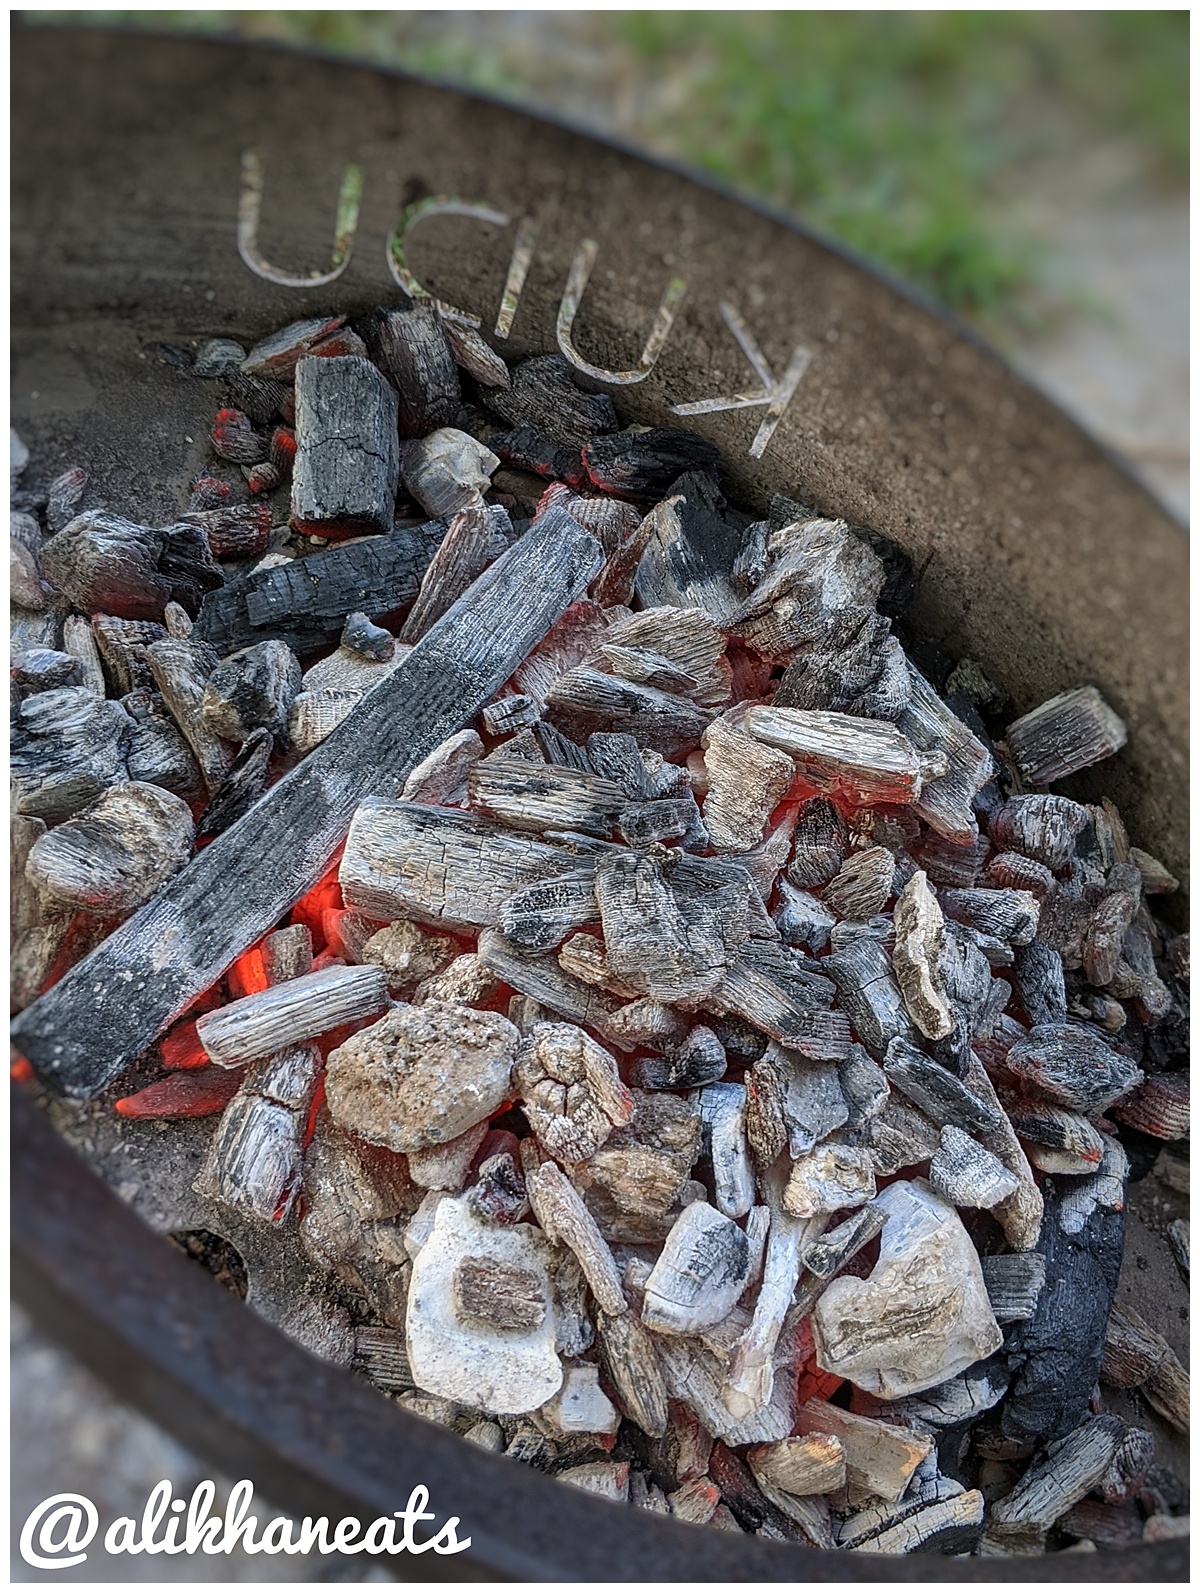 Battle of the Wagyu steaks hardwood coals